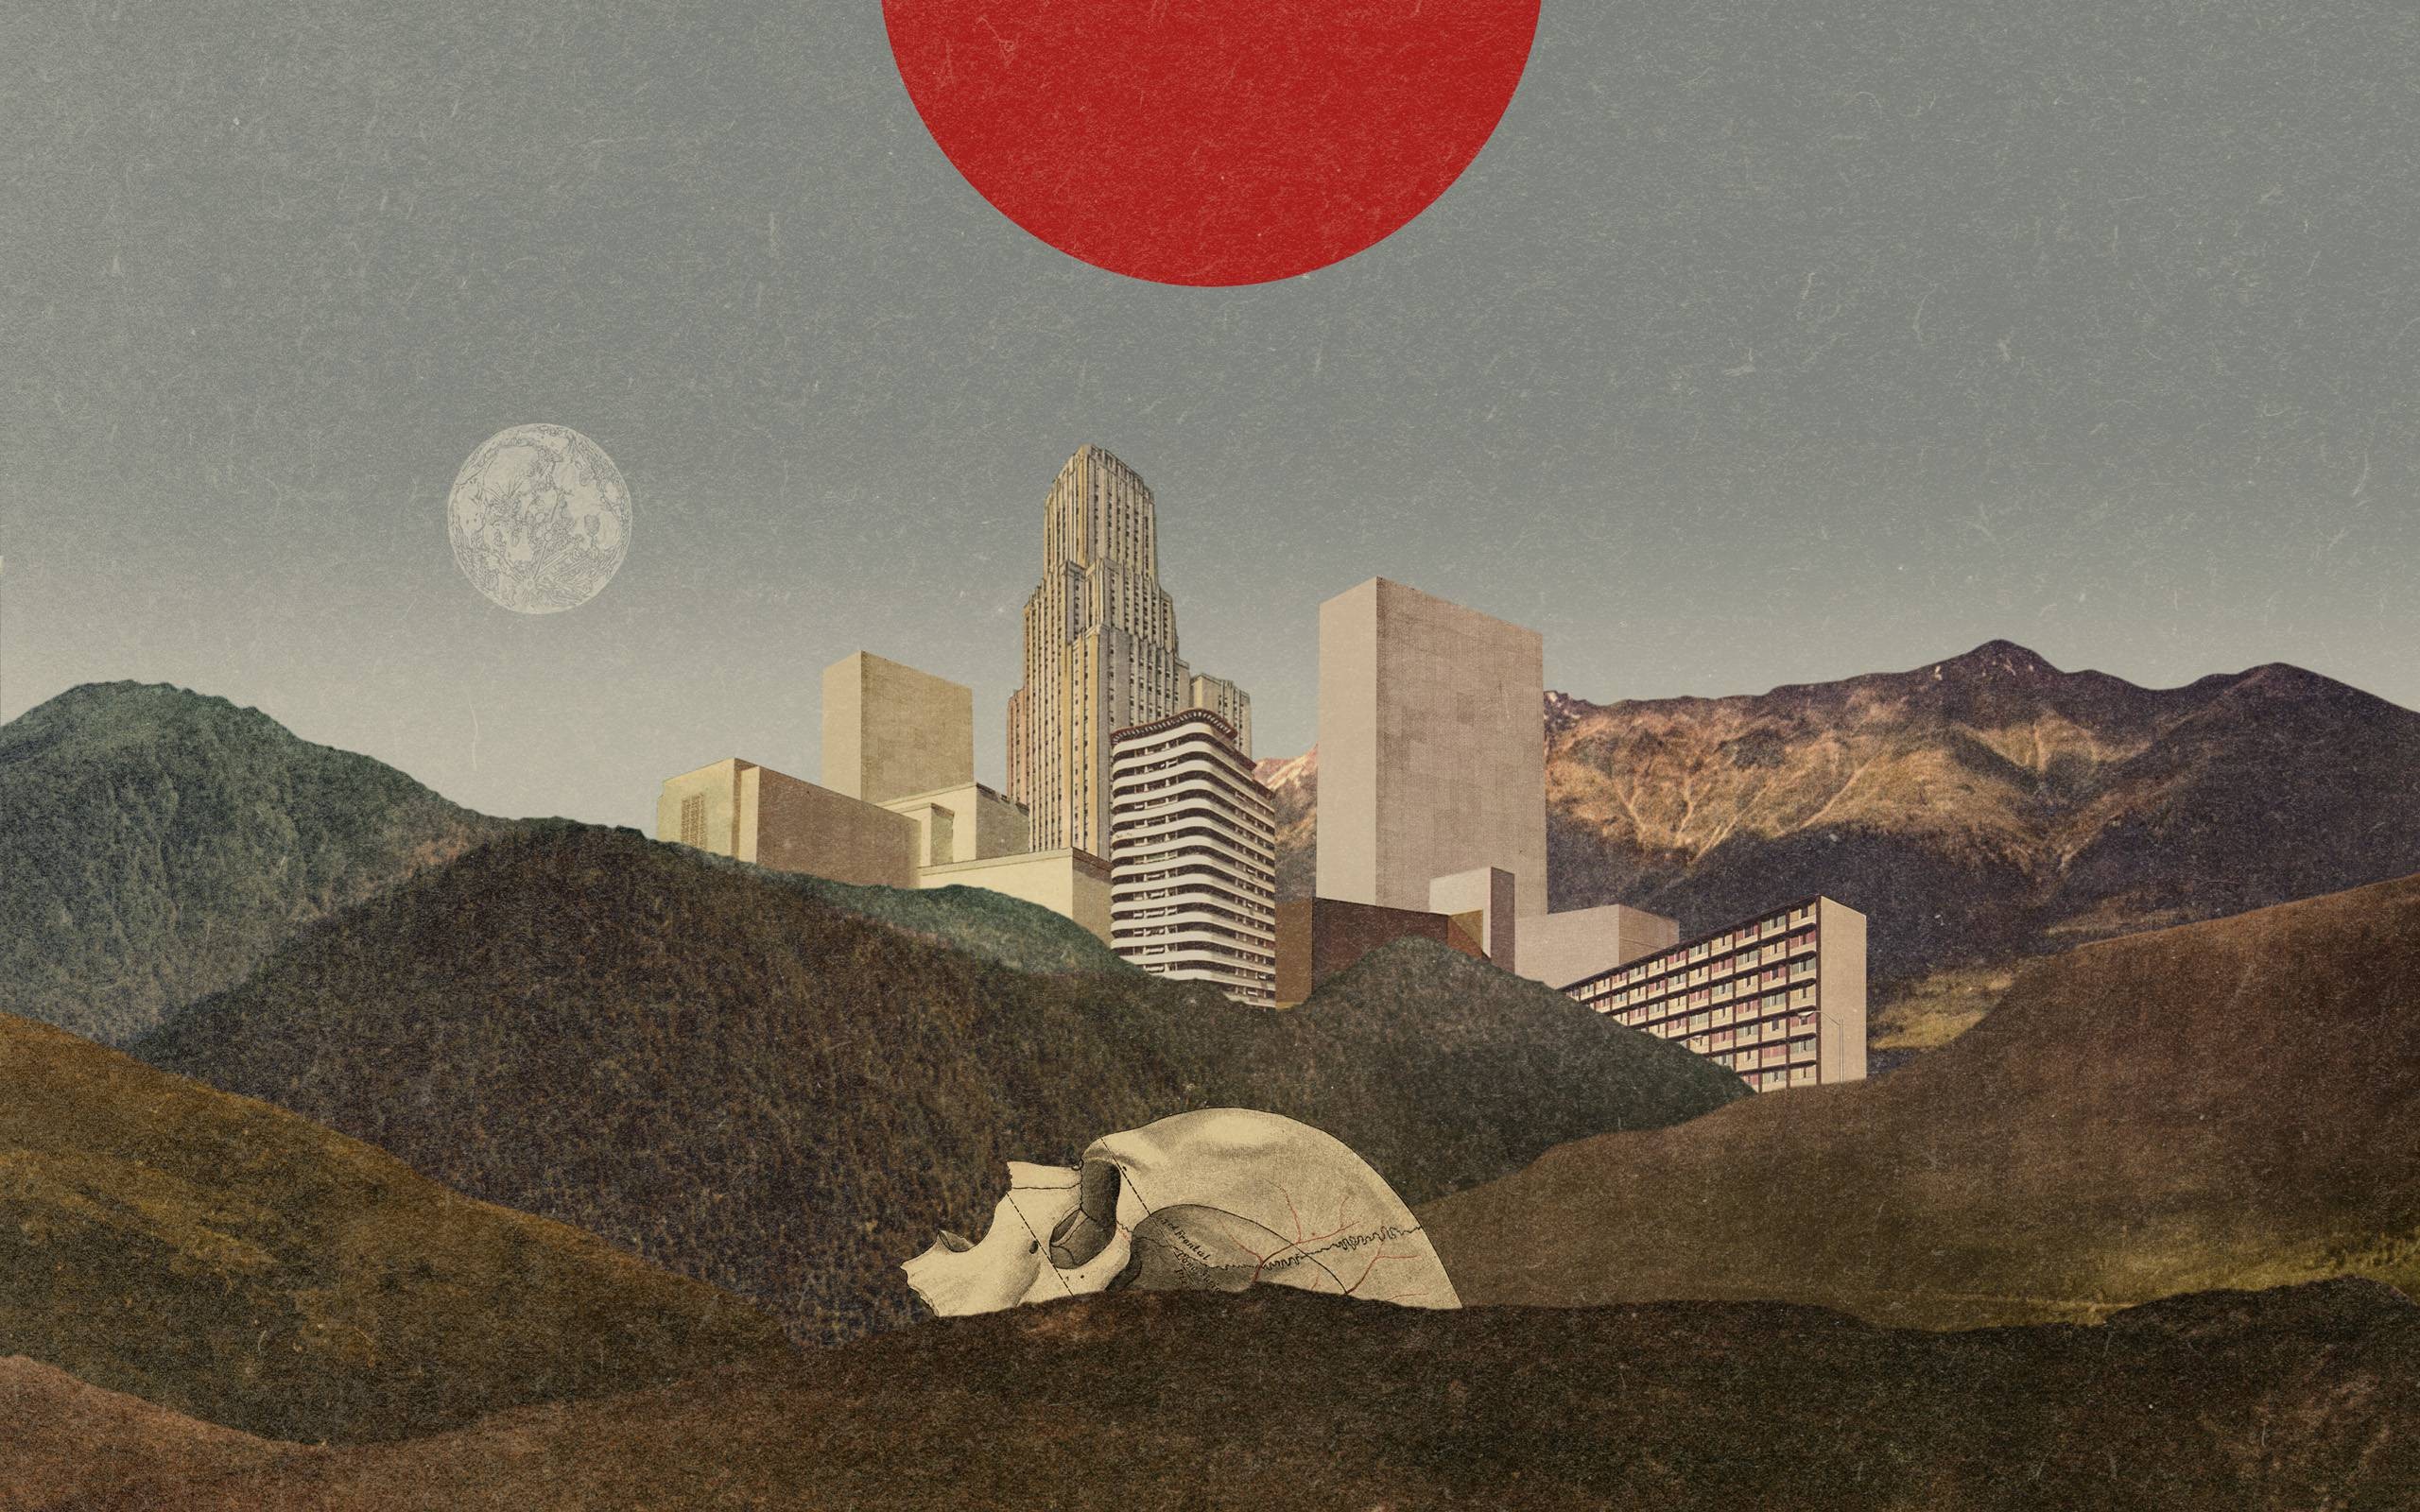 General 2560x1600 nature landscape digital art Sun Moon skull hills mountains building album covers cover art